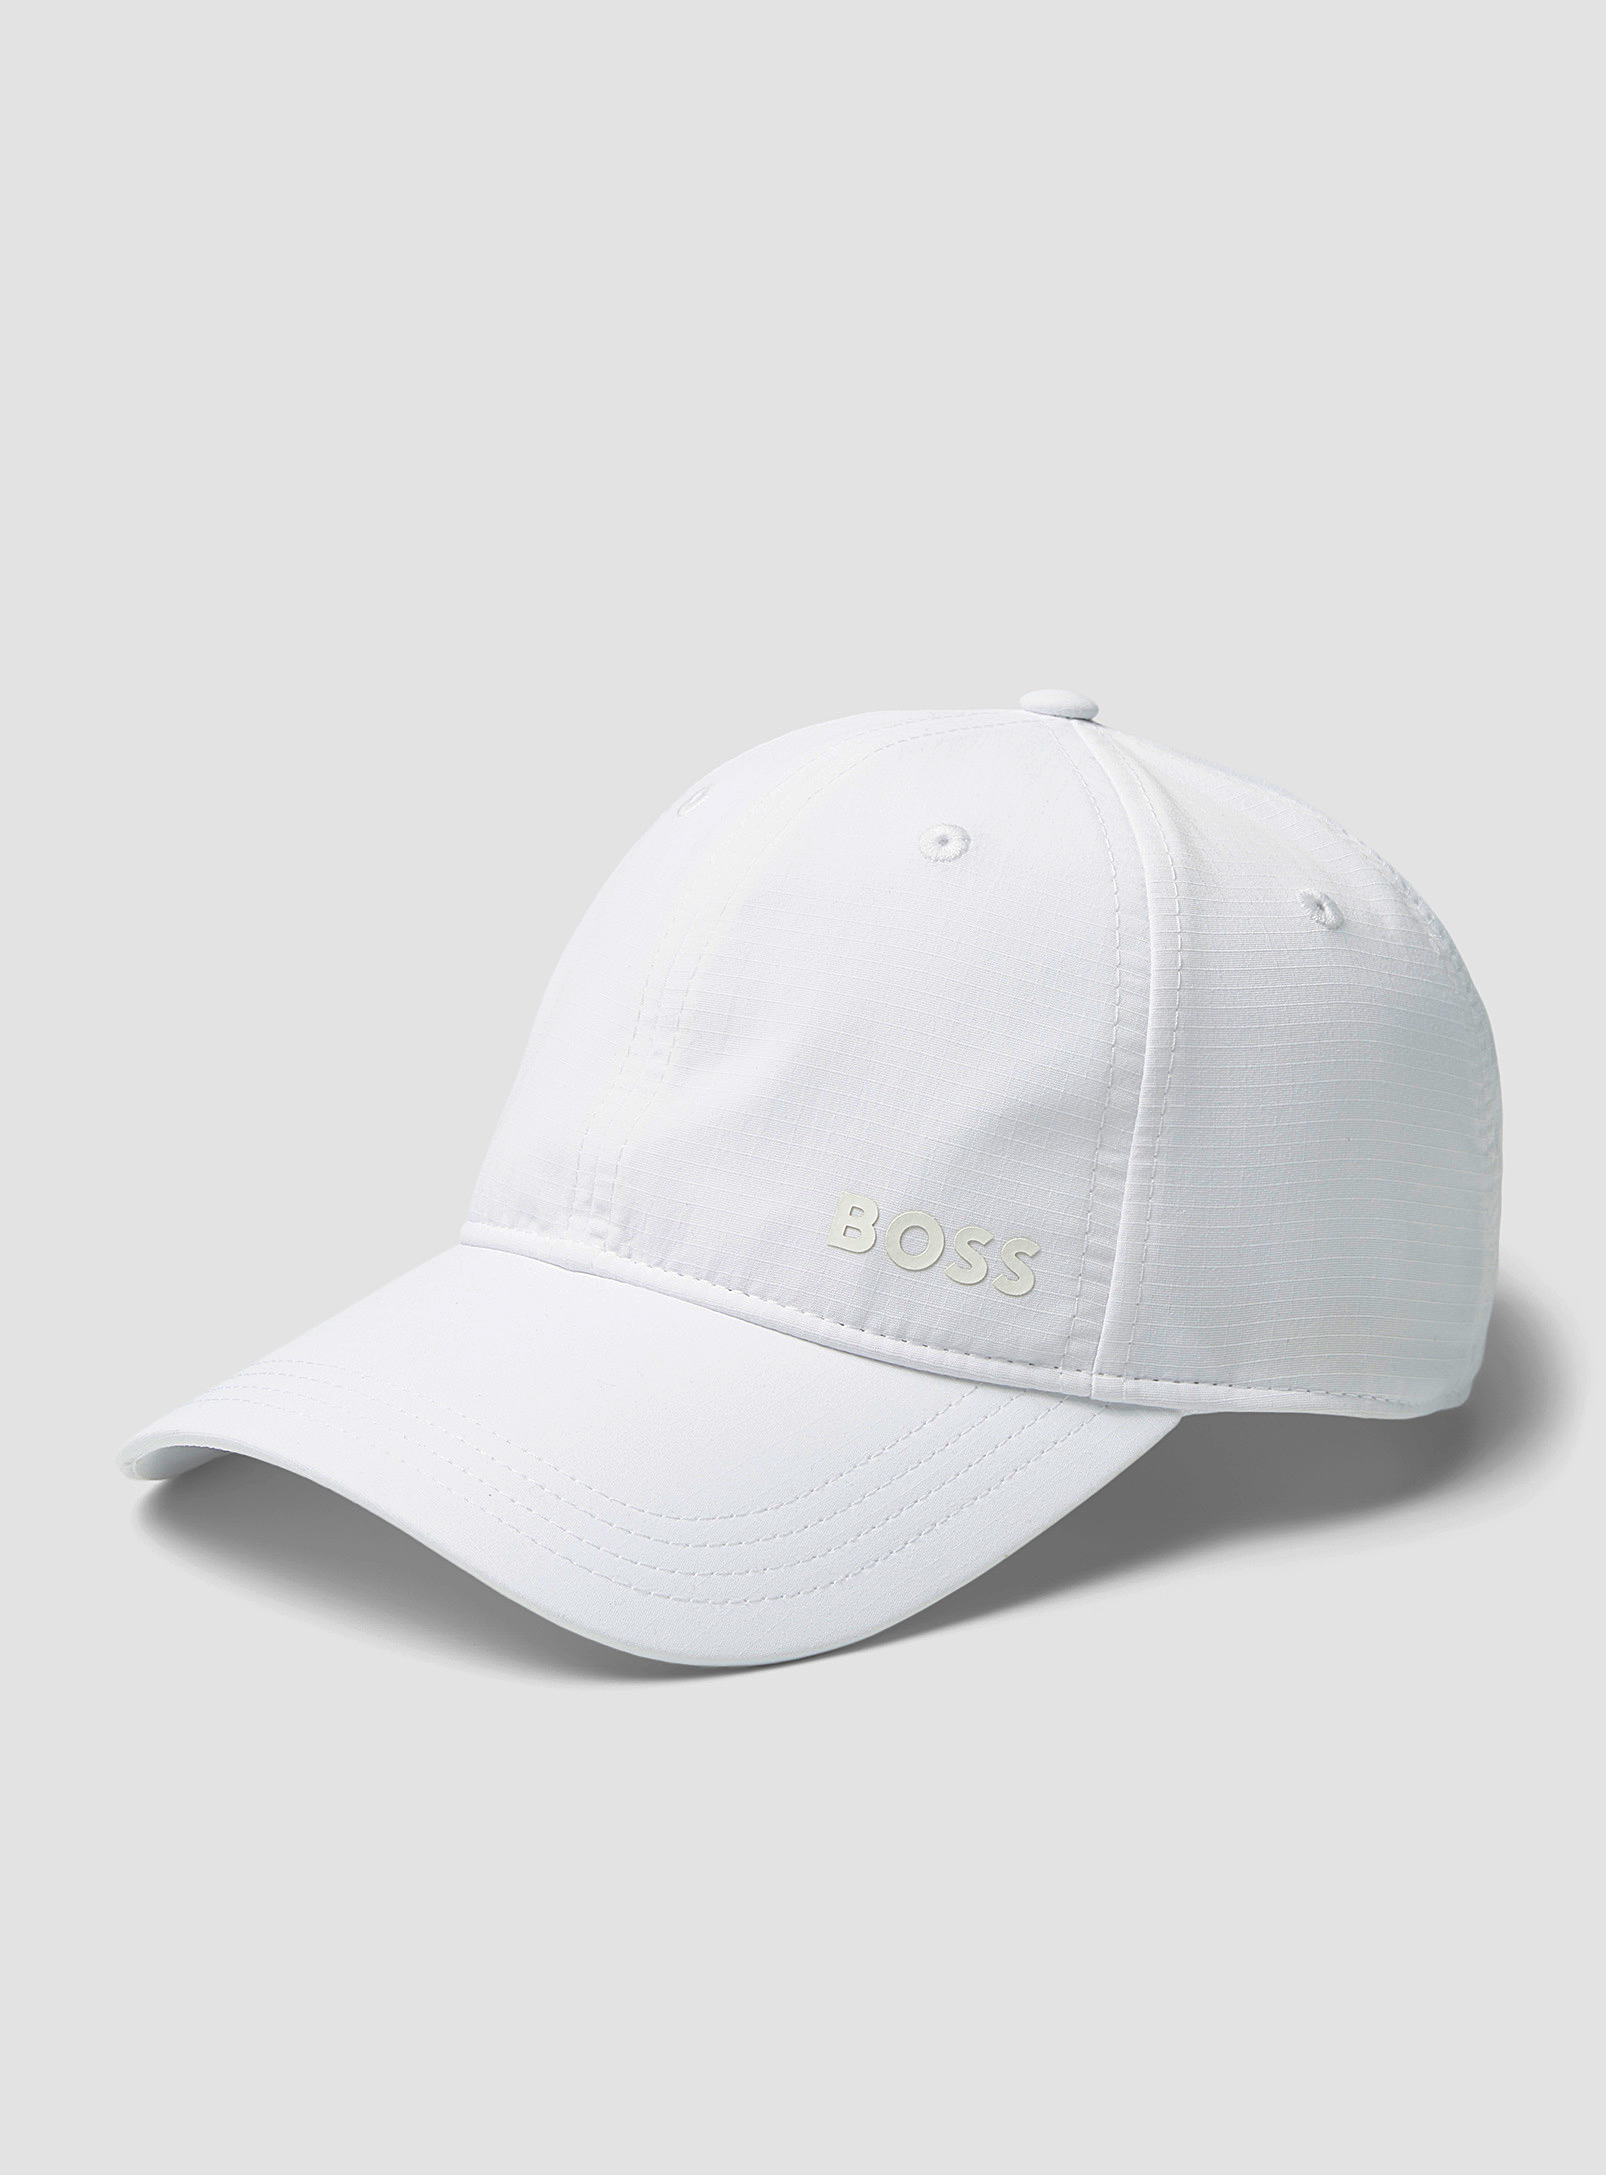 BOSS - Soft monochrome cap